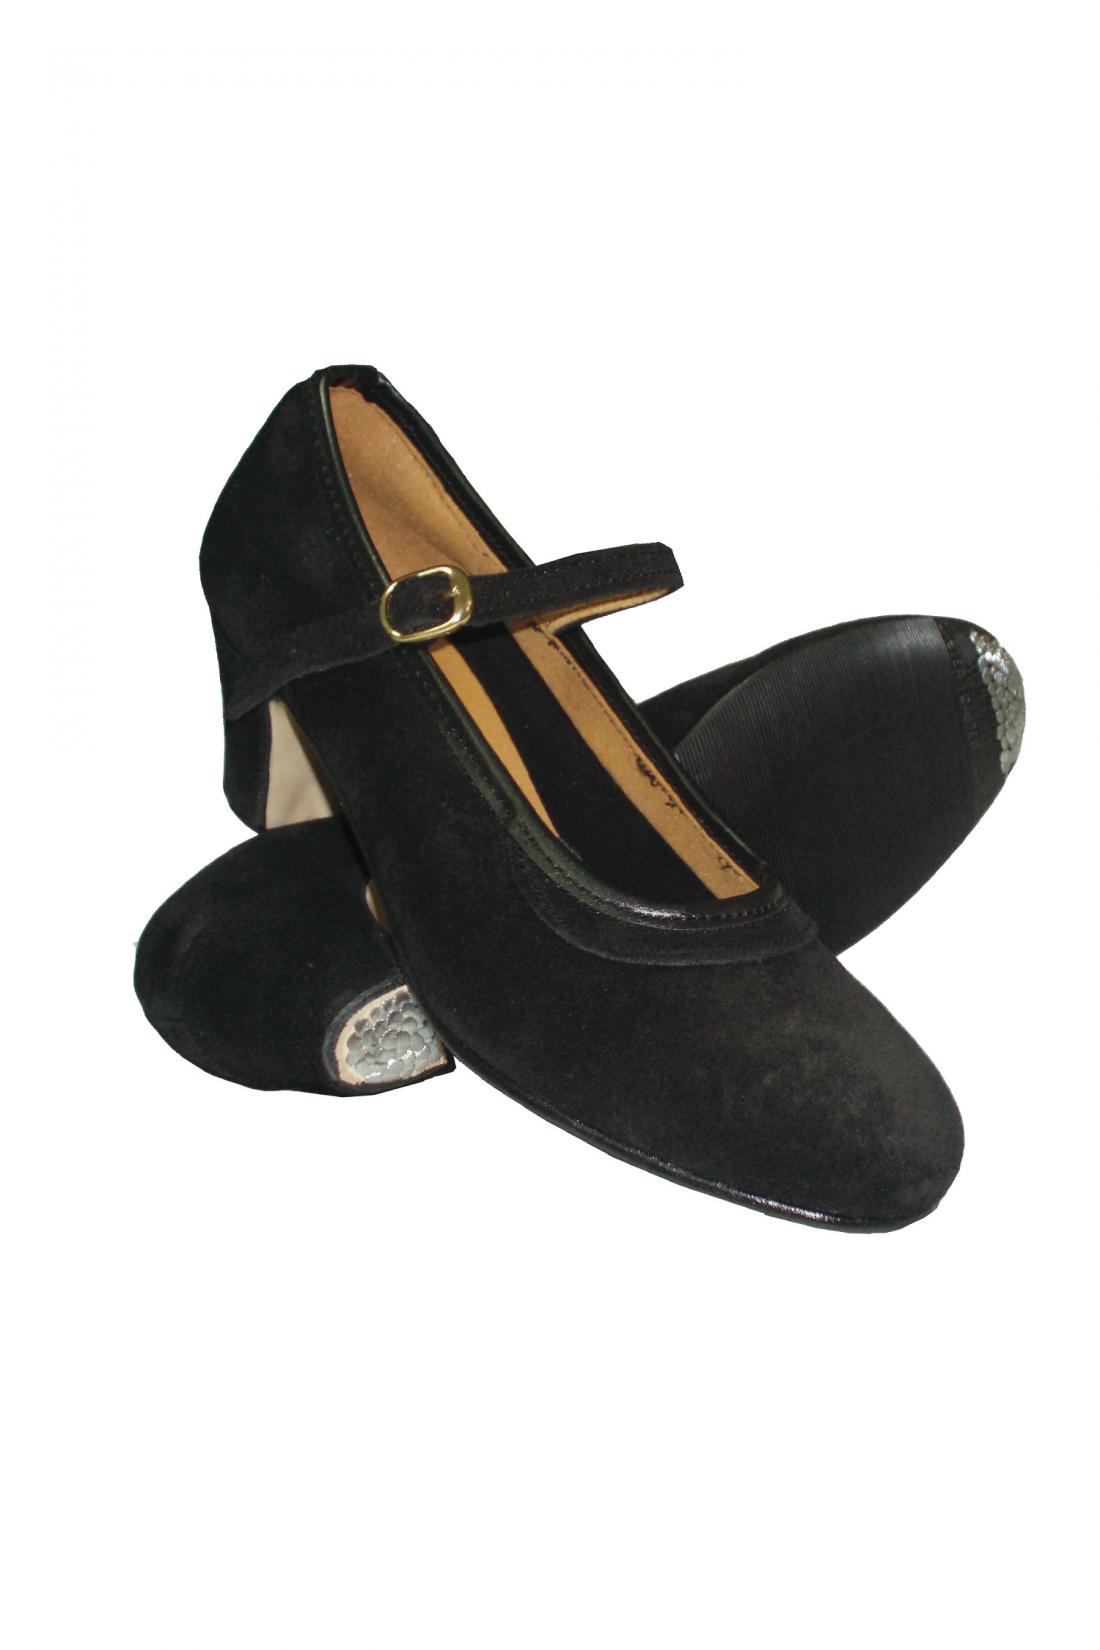 Zapatos de Flamenco de Ante Intermezzo danza tallas 34 - 36,5